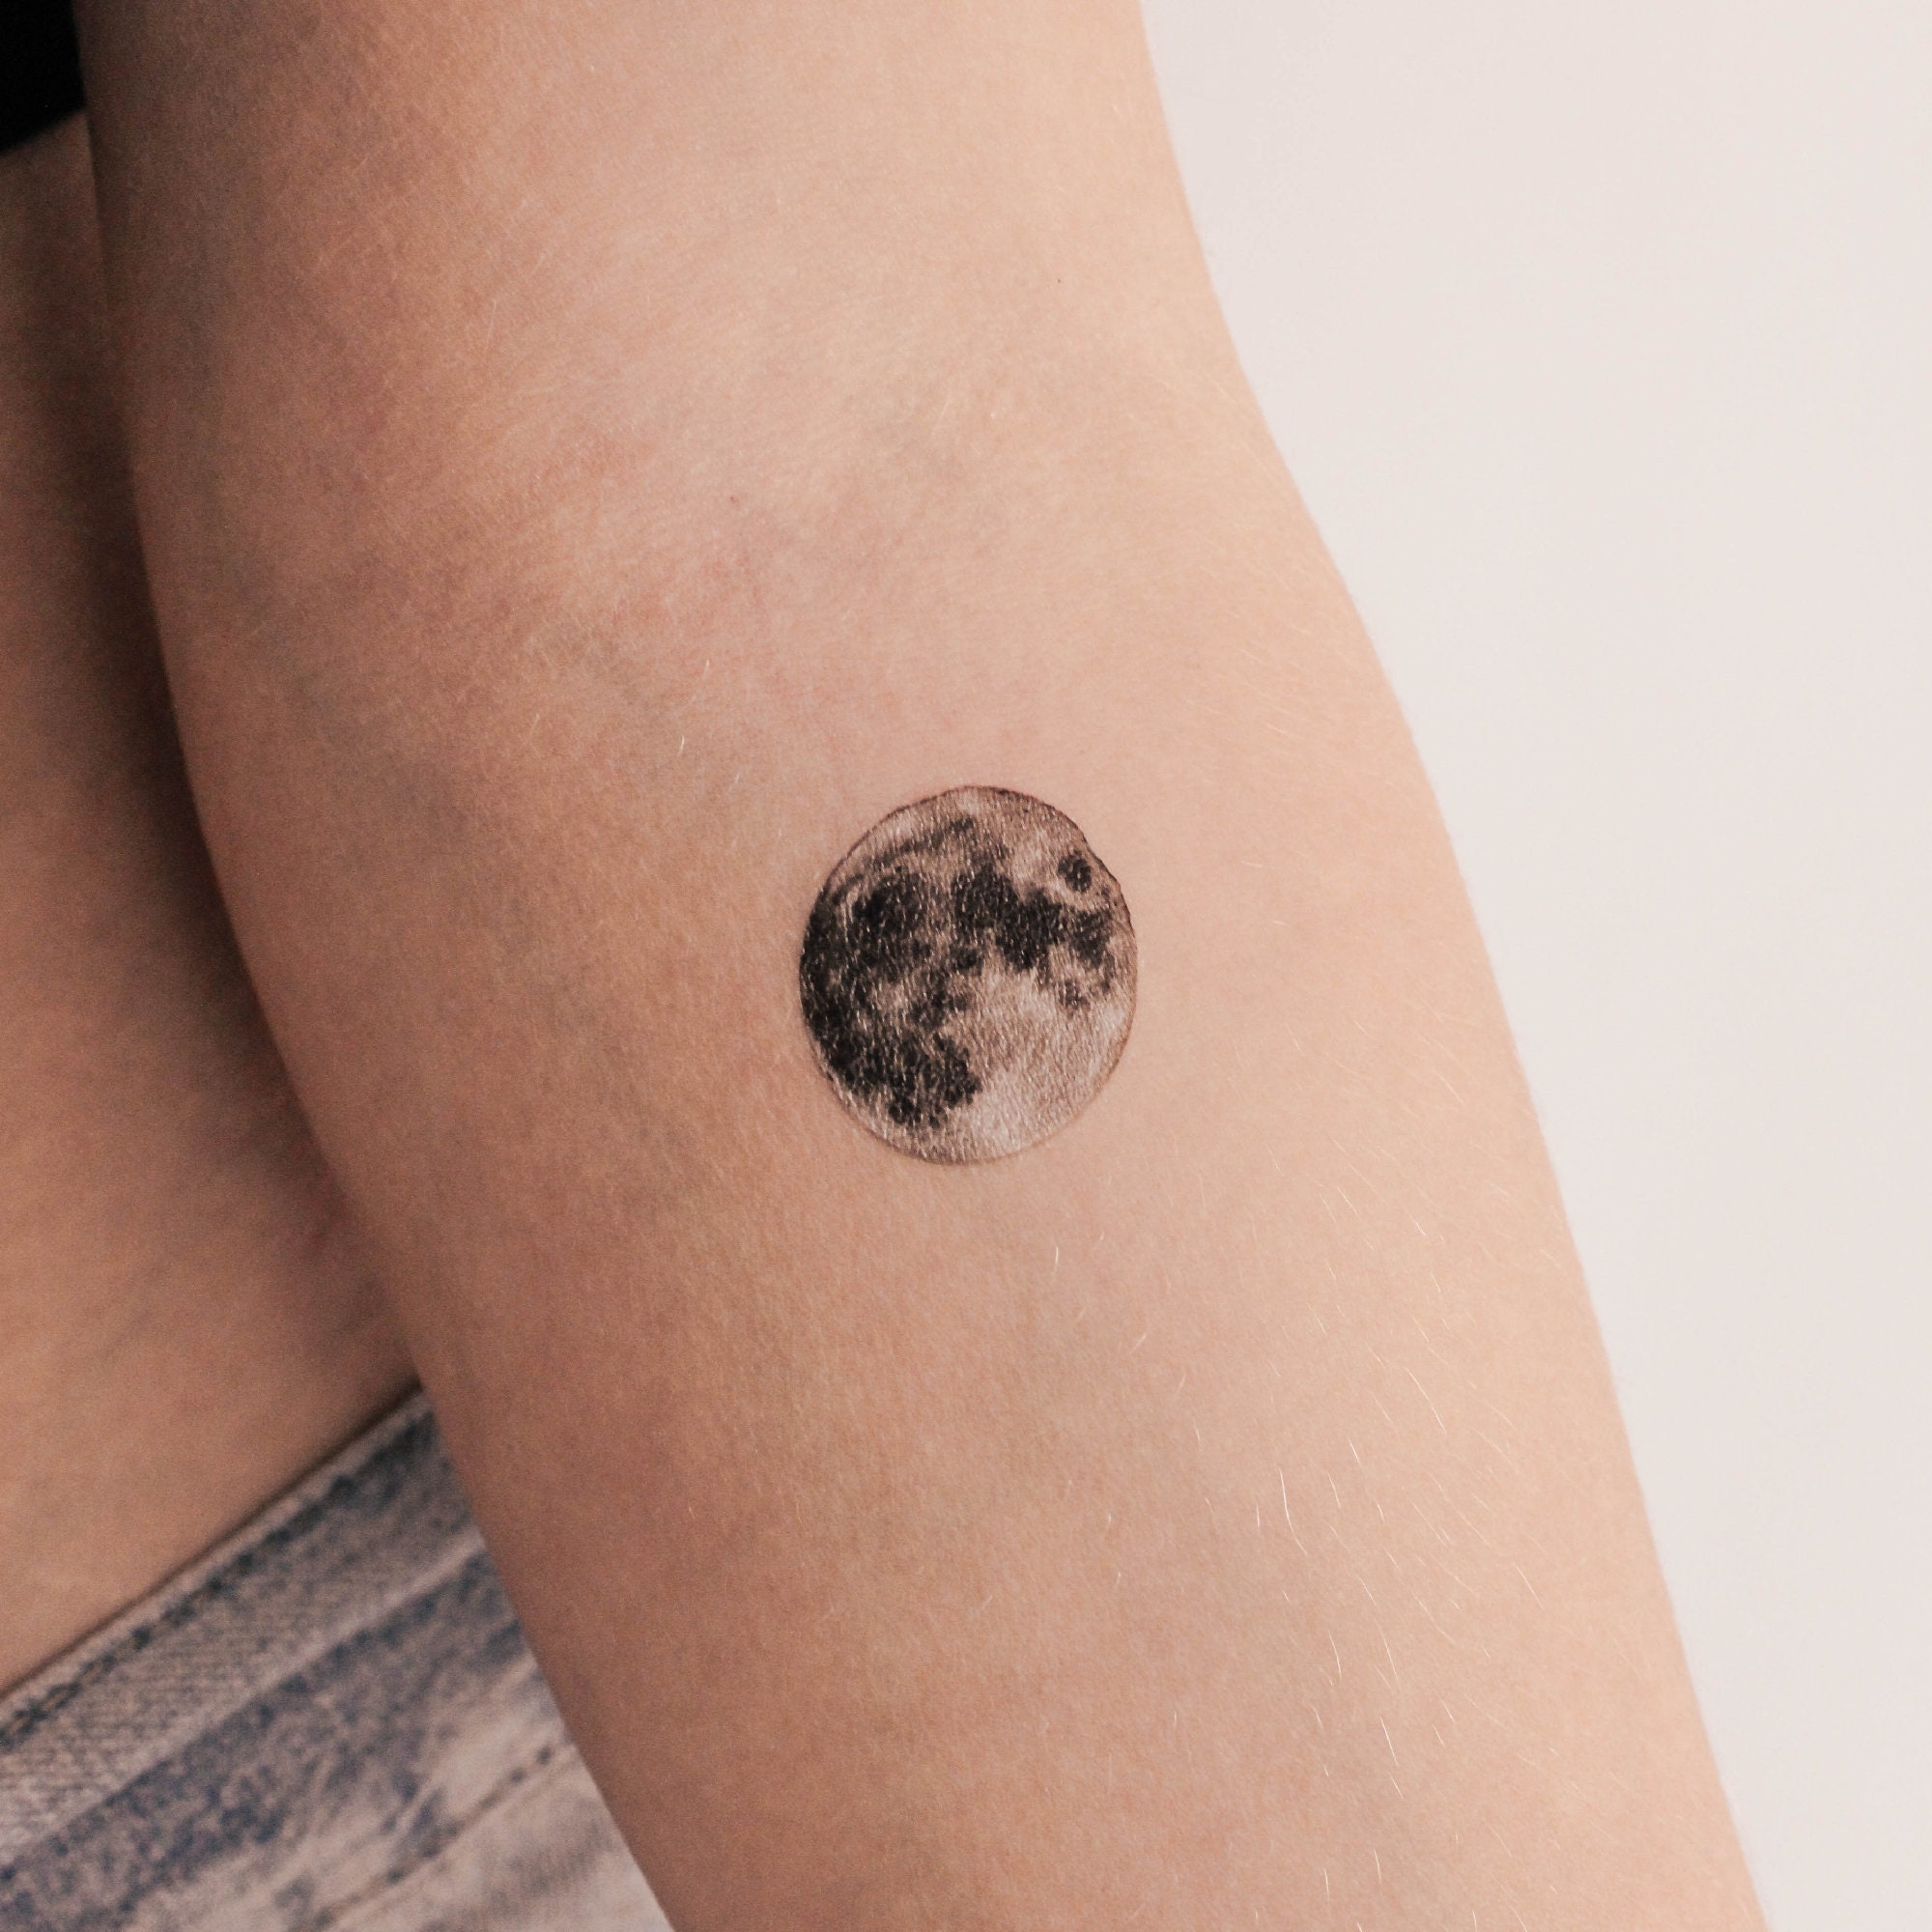 Full moon tattoo by Emrah Ozhan | Post 31585